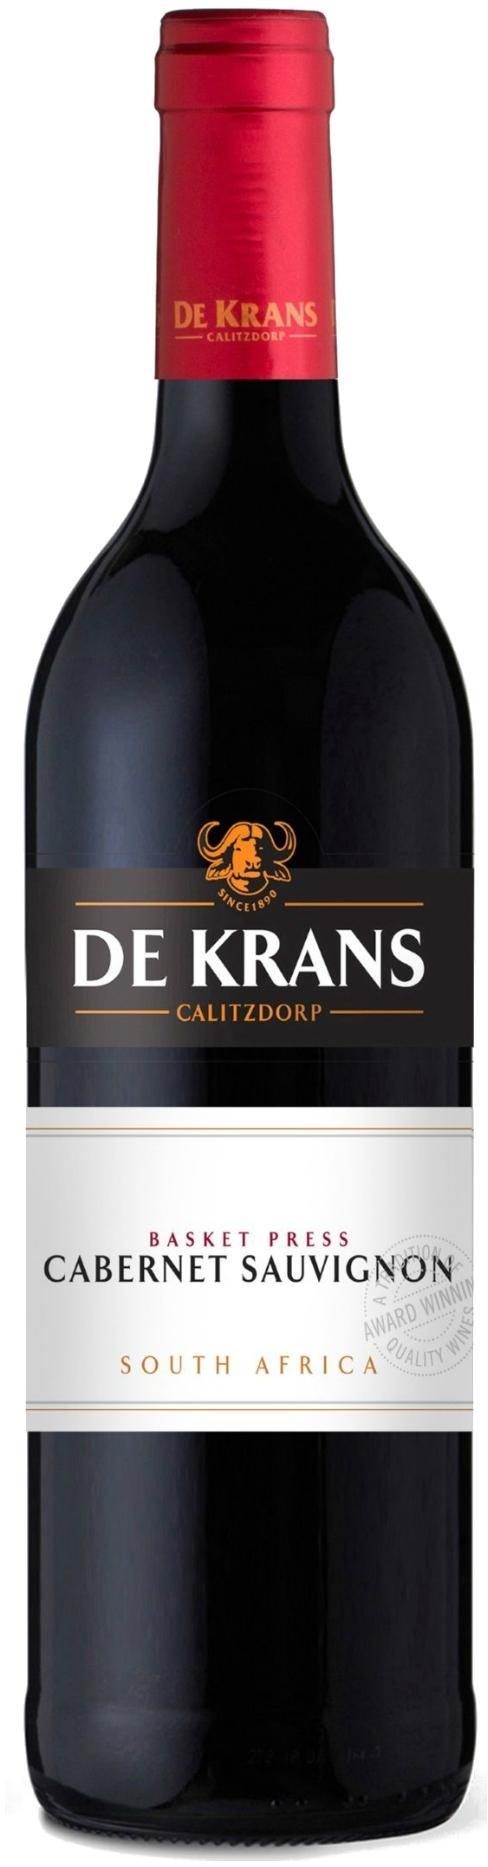 De Krans Basket Press Cabernet Sauvignon (Rotwein, Südafrika, Calitzdorp) |  Curry Premium Wines oHG | Rotweine